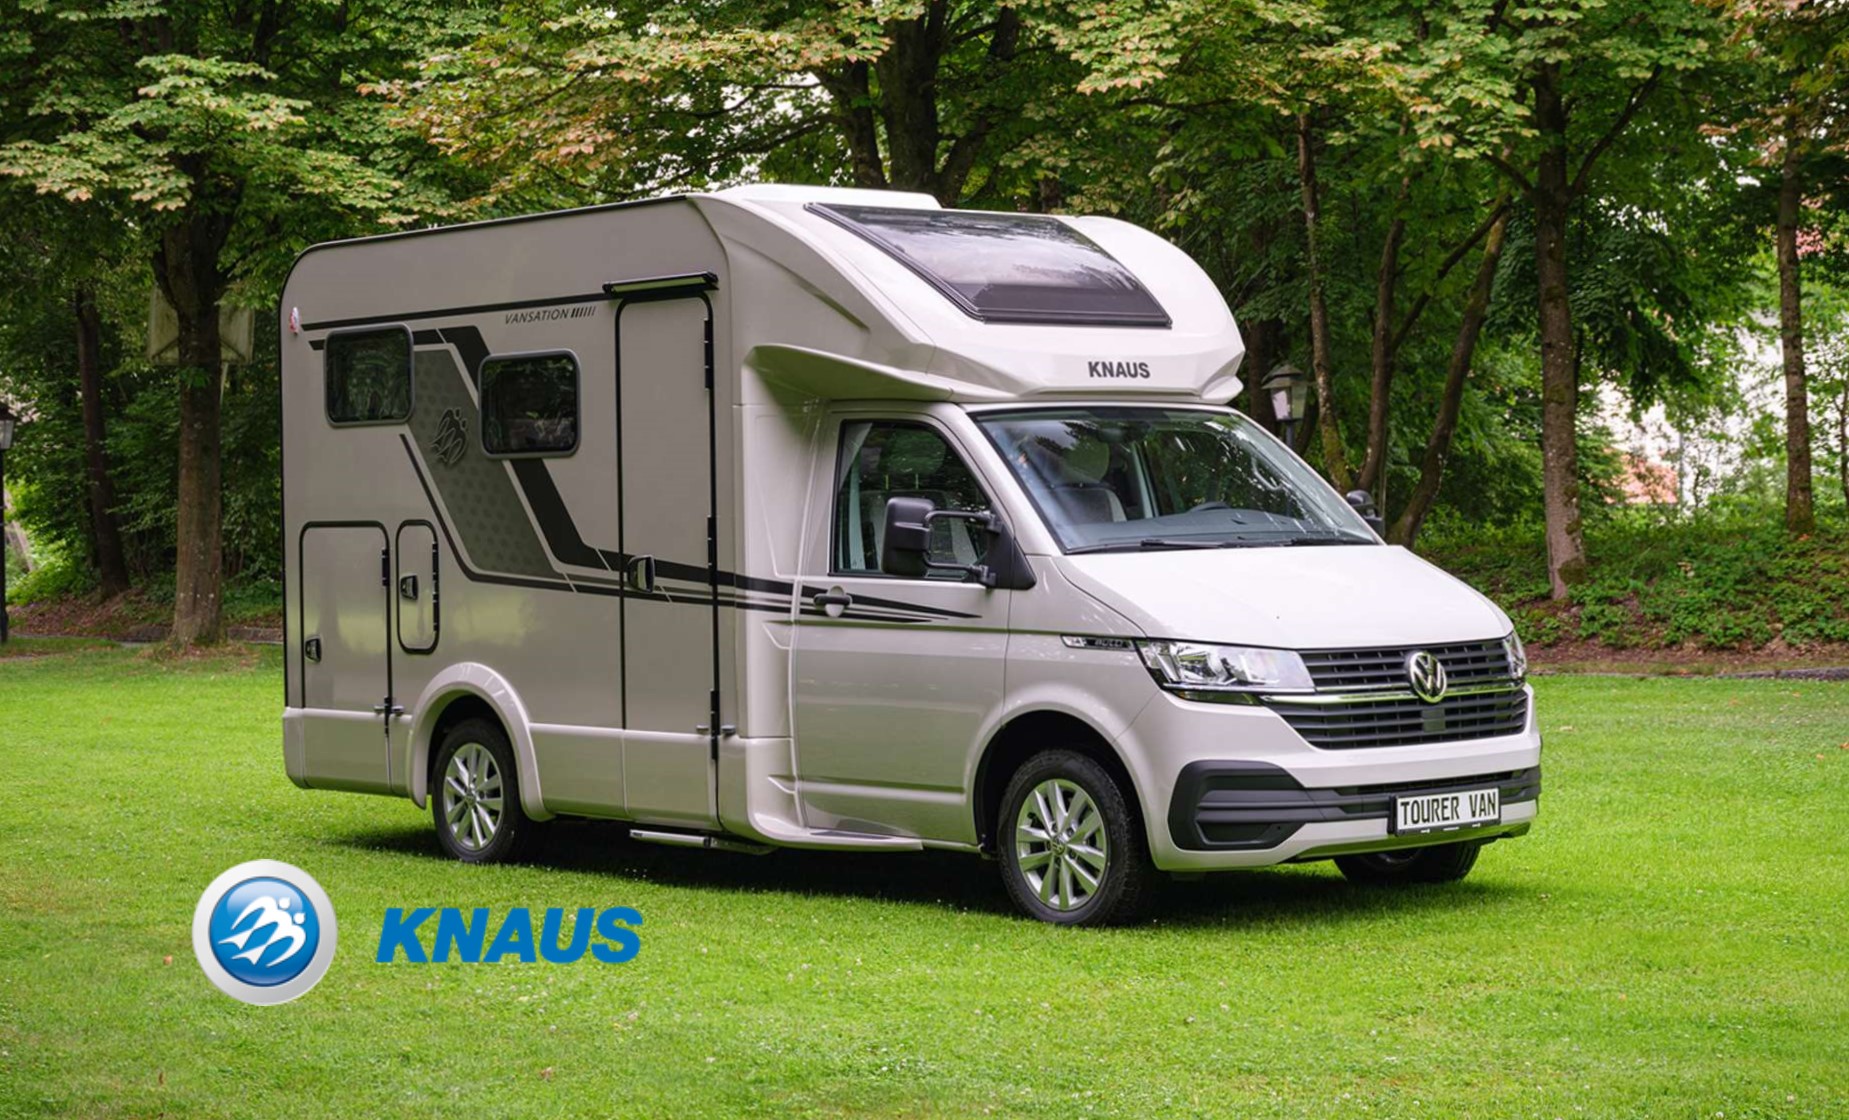  AVAILABLE NOW NEW MODEL 2023 Knaus Tourer Van 500 MQ Vansation Motorhome RHD 2x Berth amp 4x 